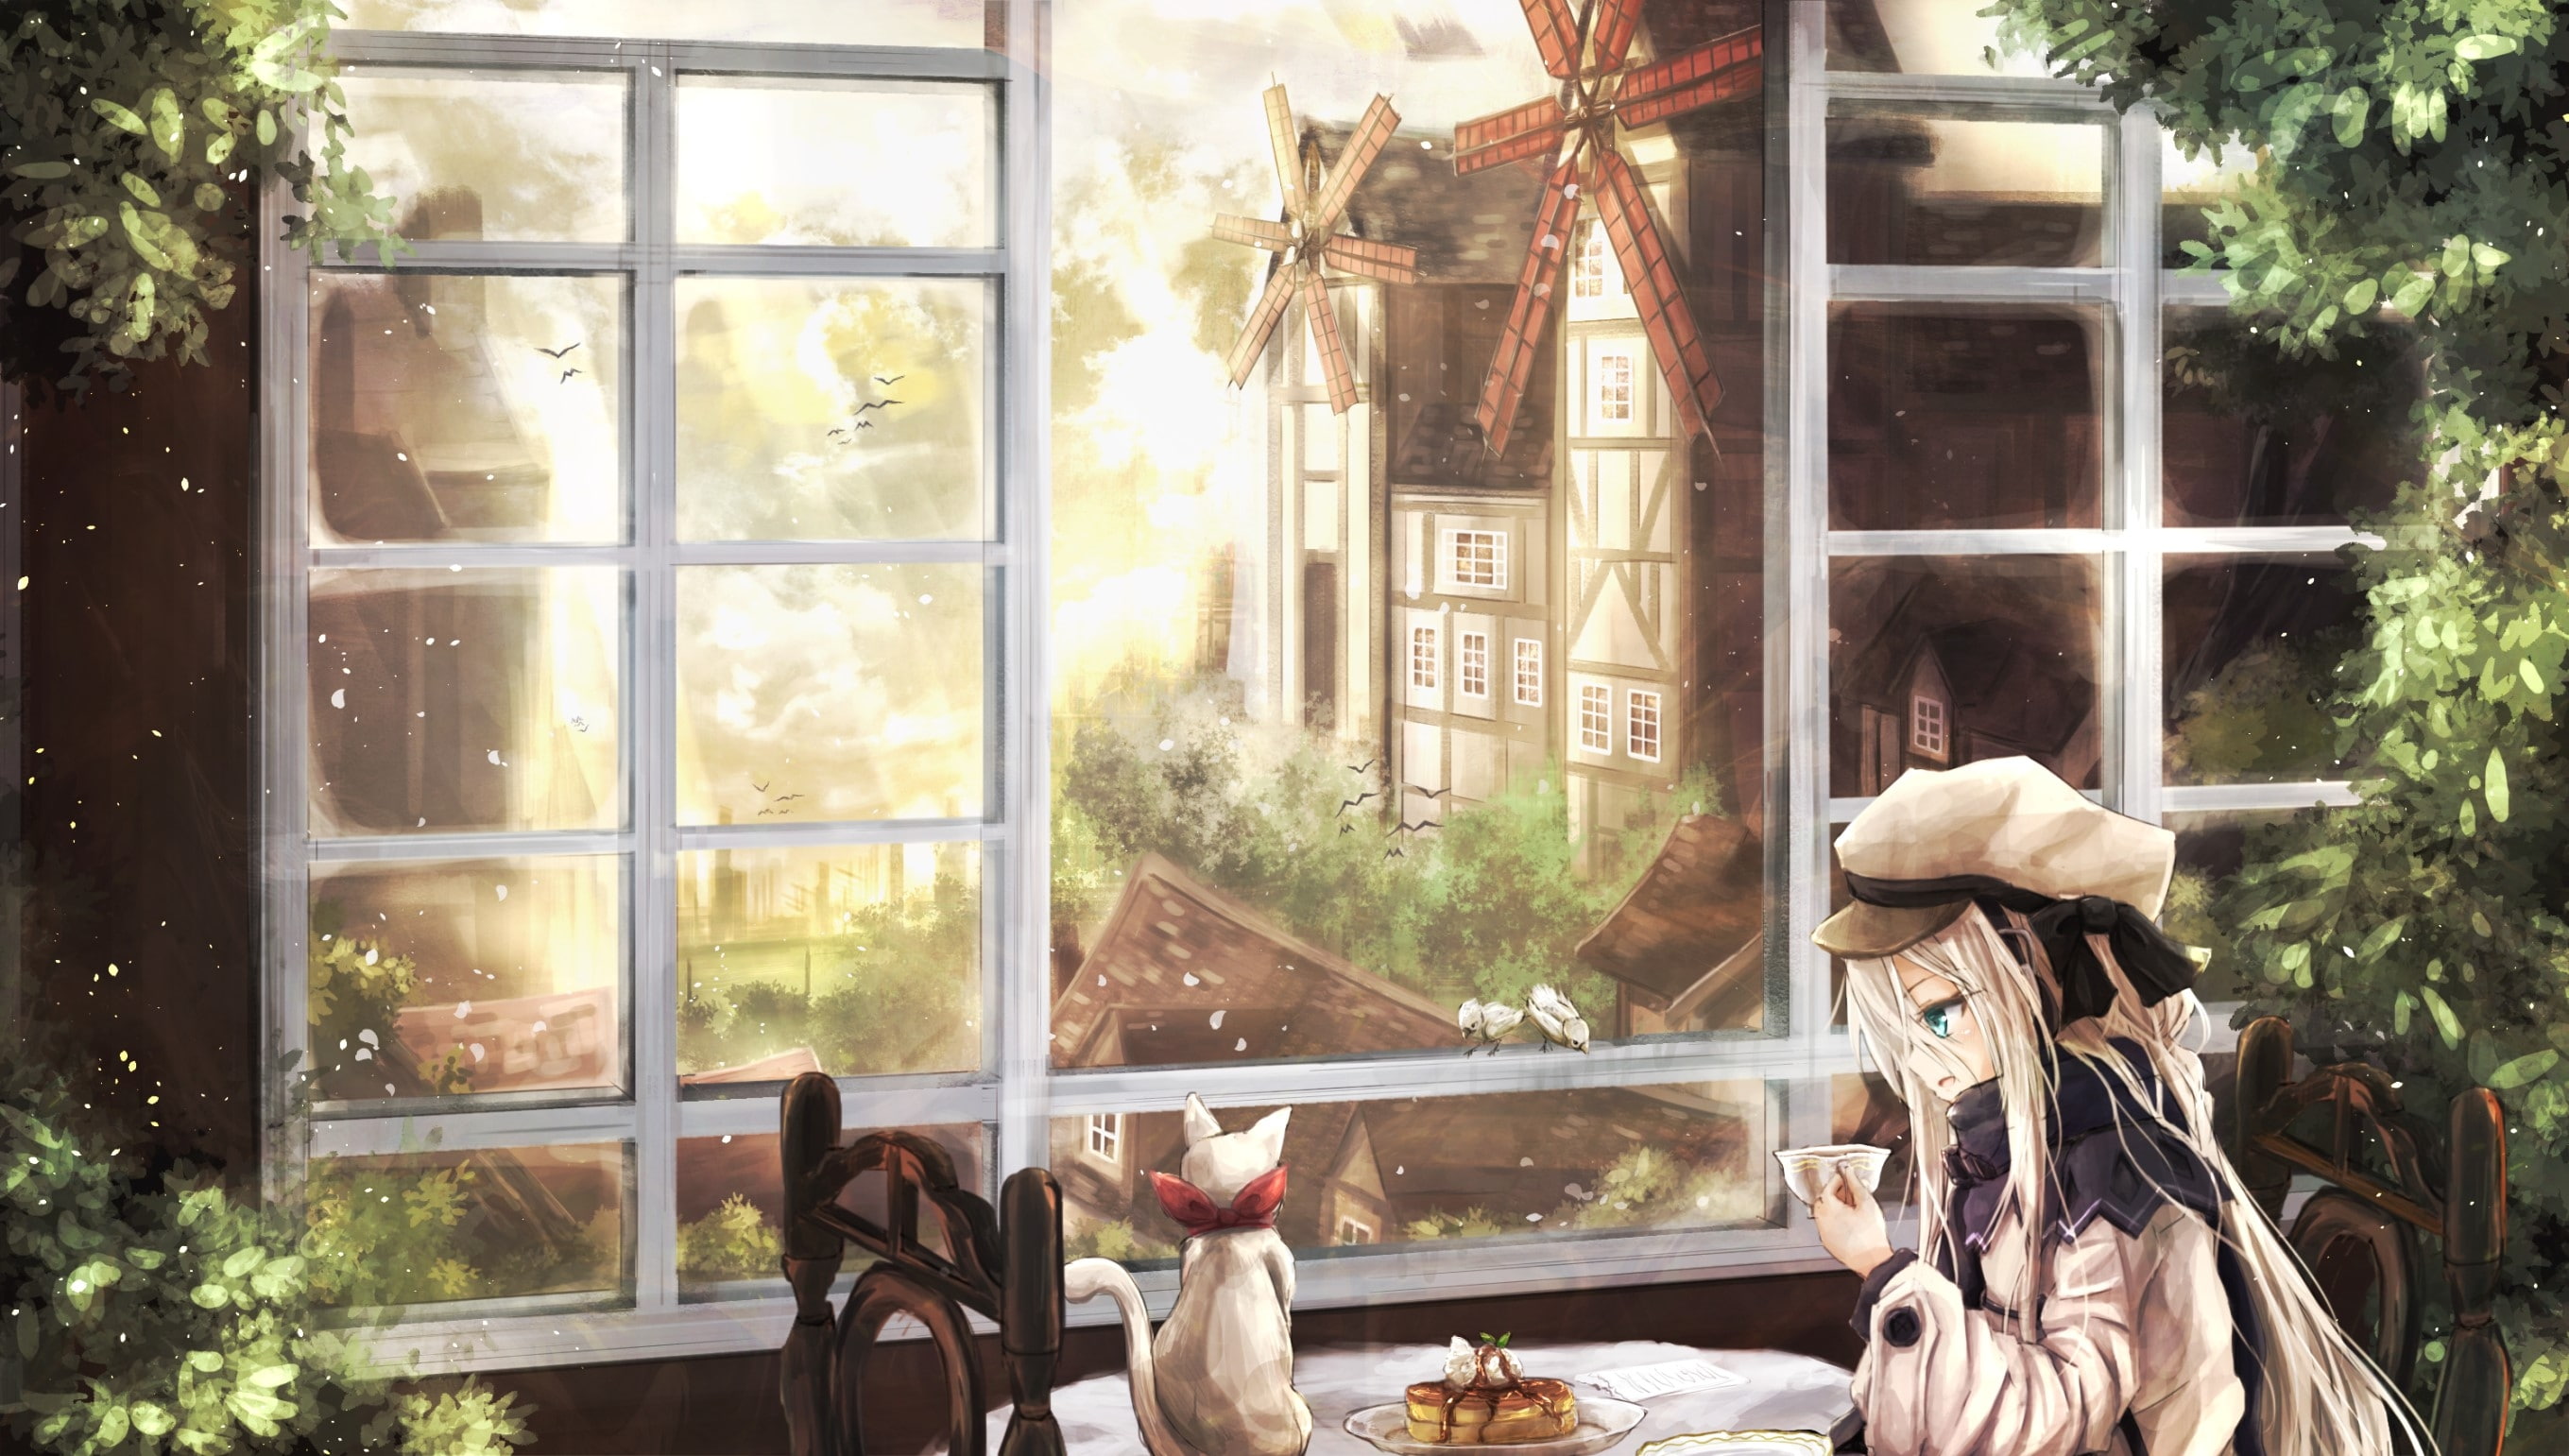 anime girl, fantasy, cat, coffee, cake, windmill, window, glass - material